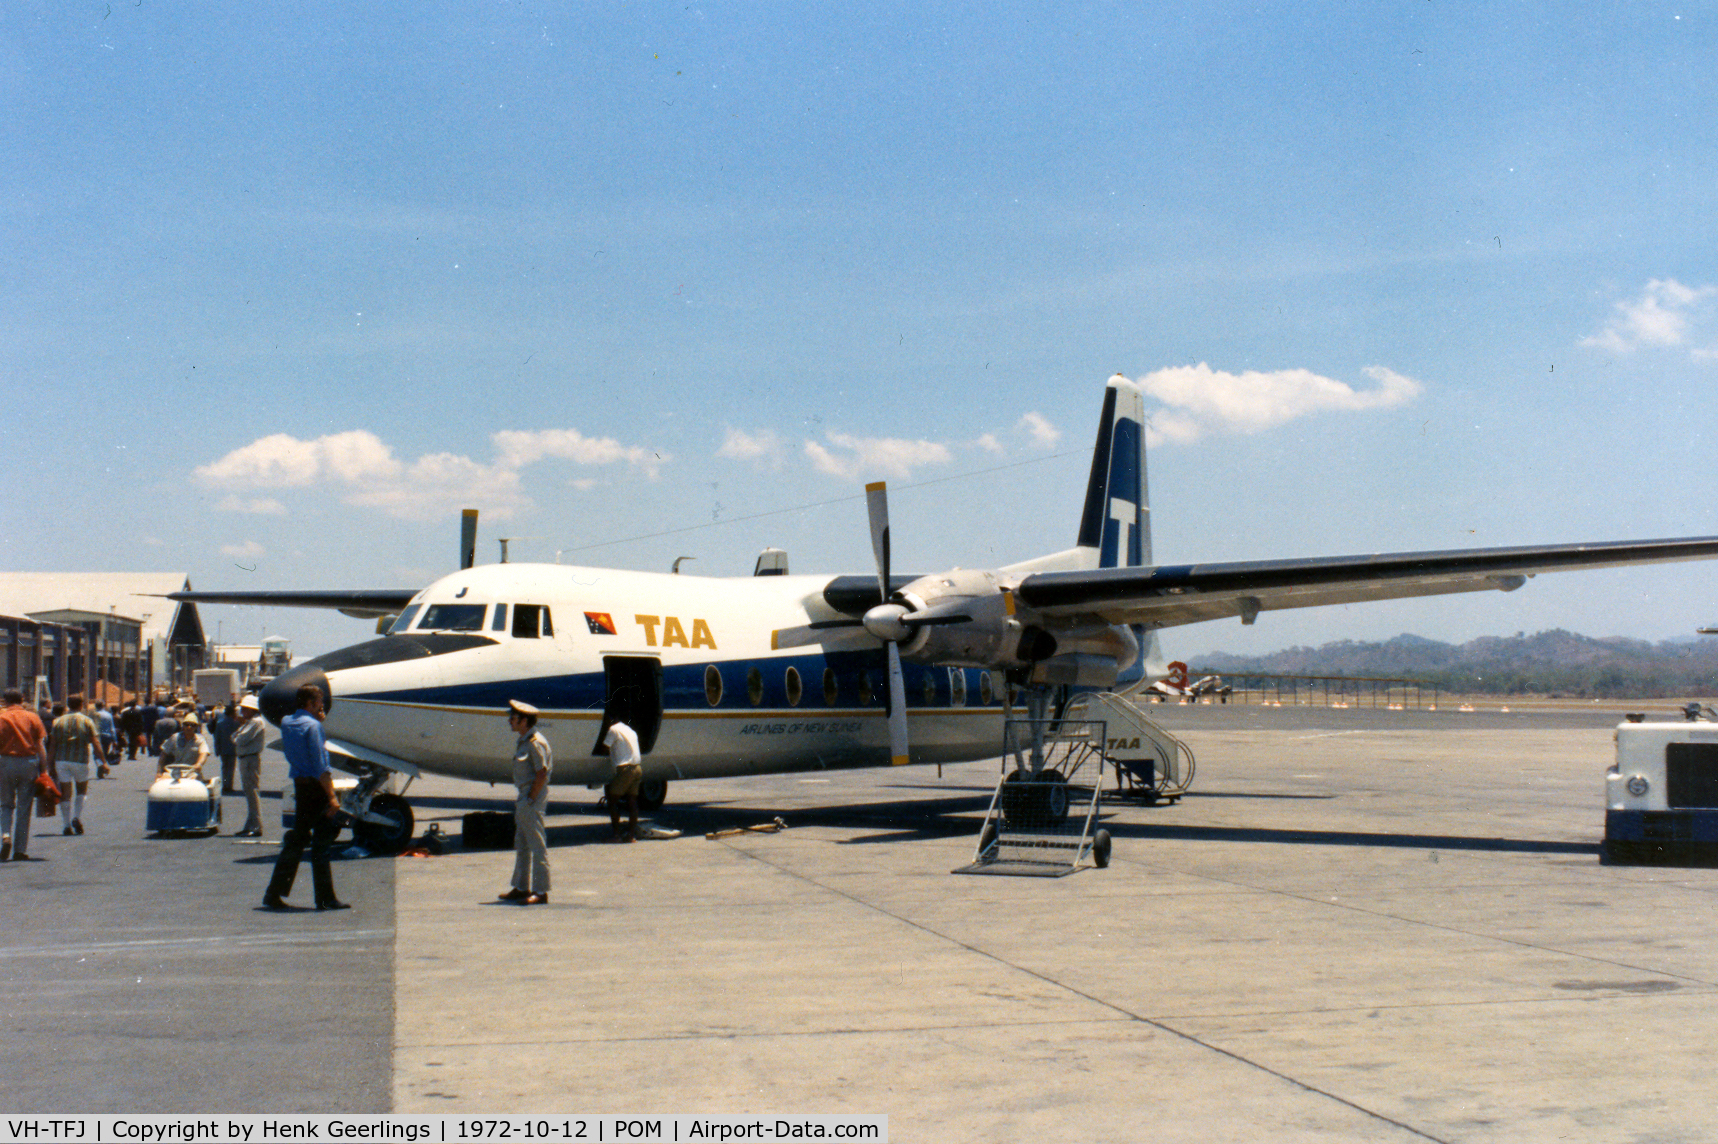 VH-TFJ, 1959 Fokker F-27-200 Friendship C/N 10135, TAA - Trans Australian Airlines